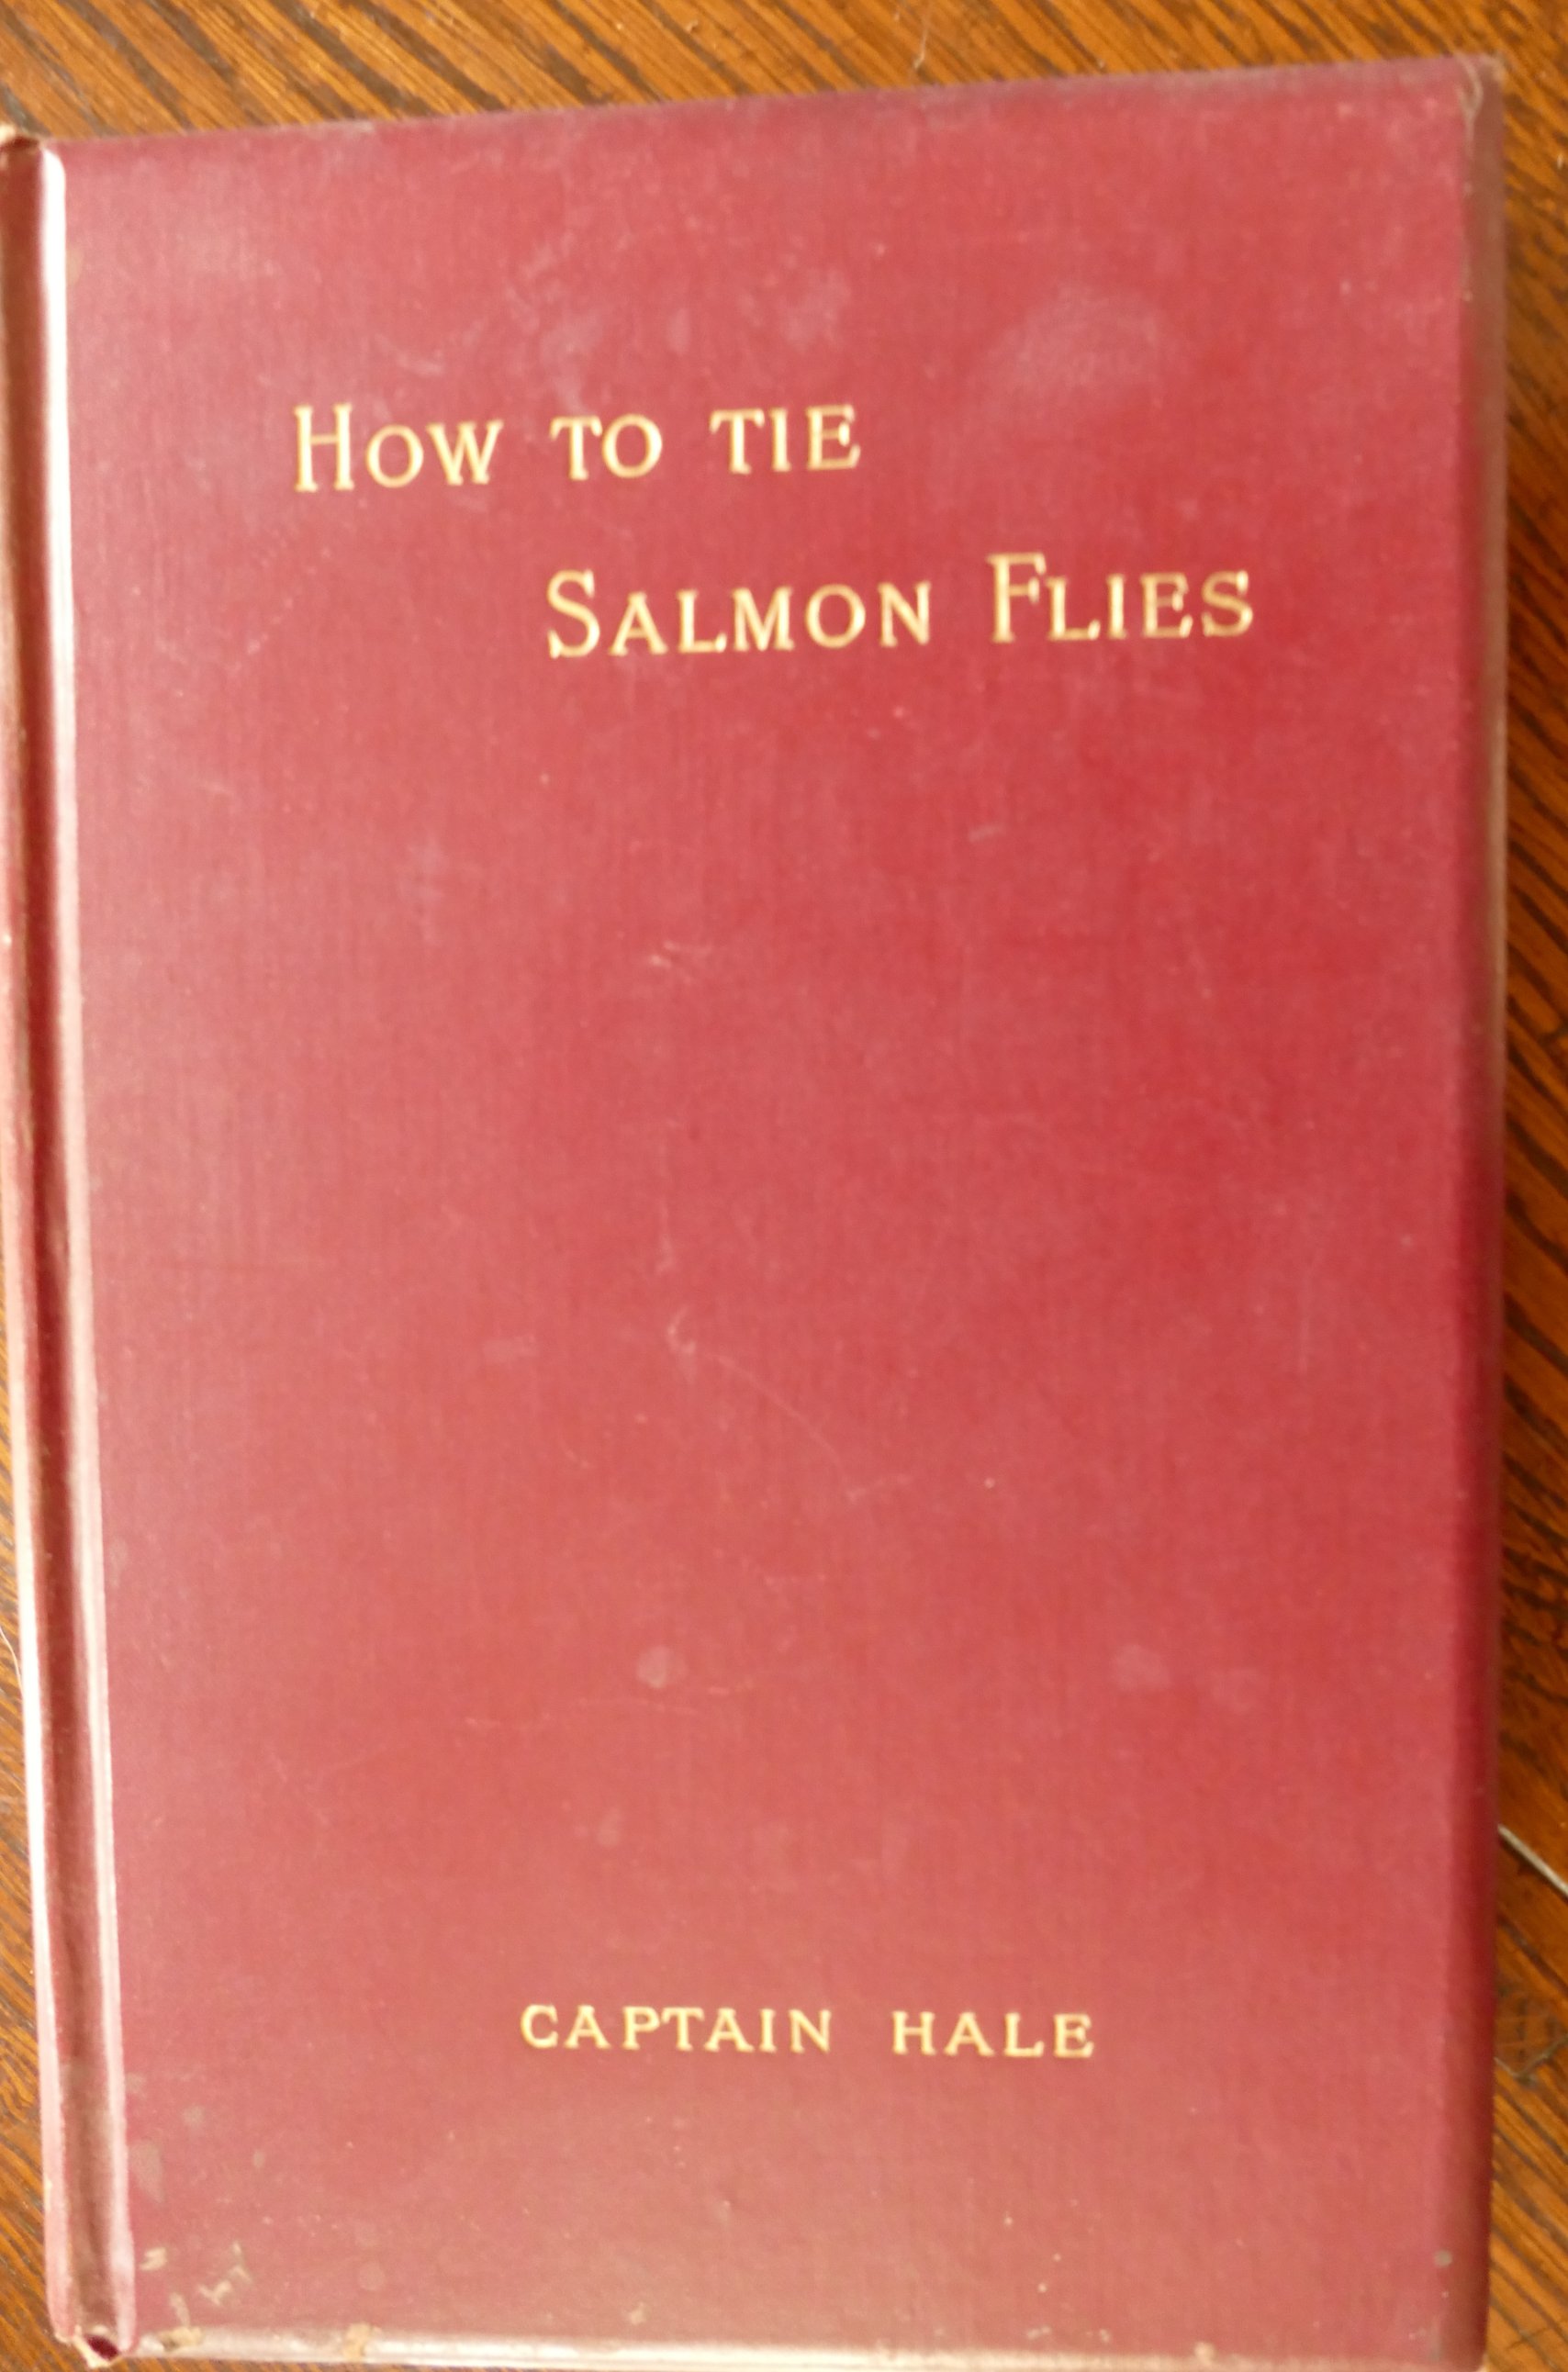 HALE Captain, How to Tie Salmon Flies, London 1892, 8vo,